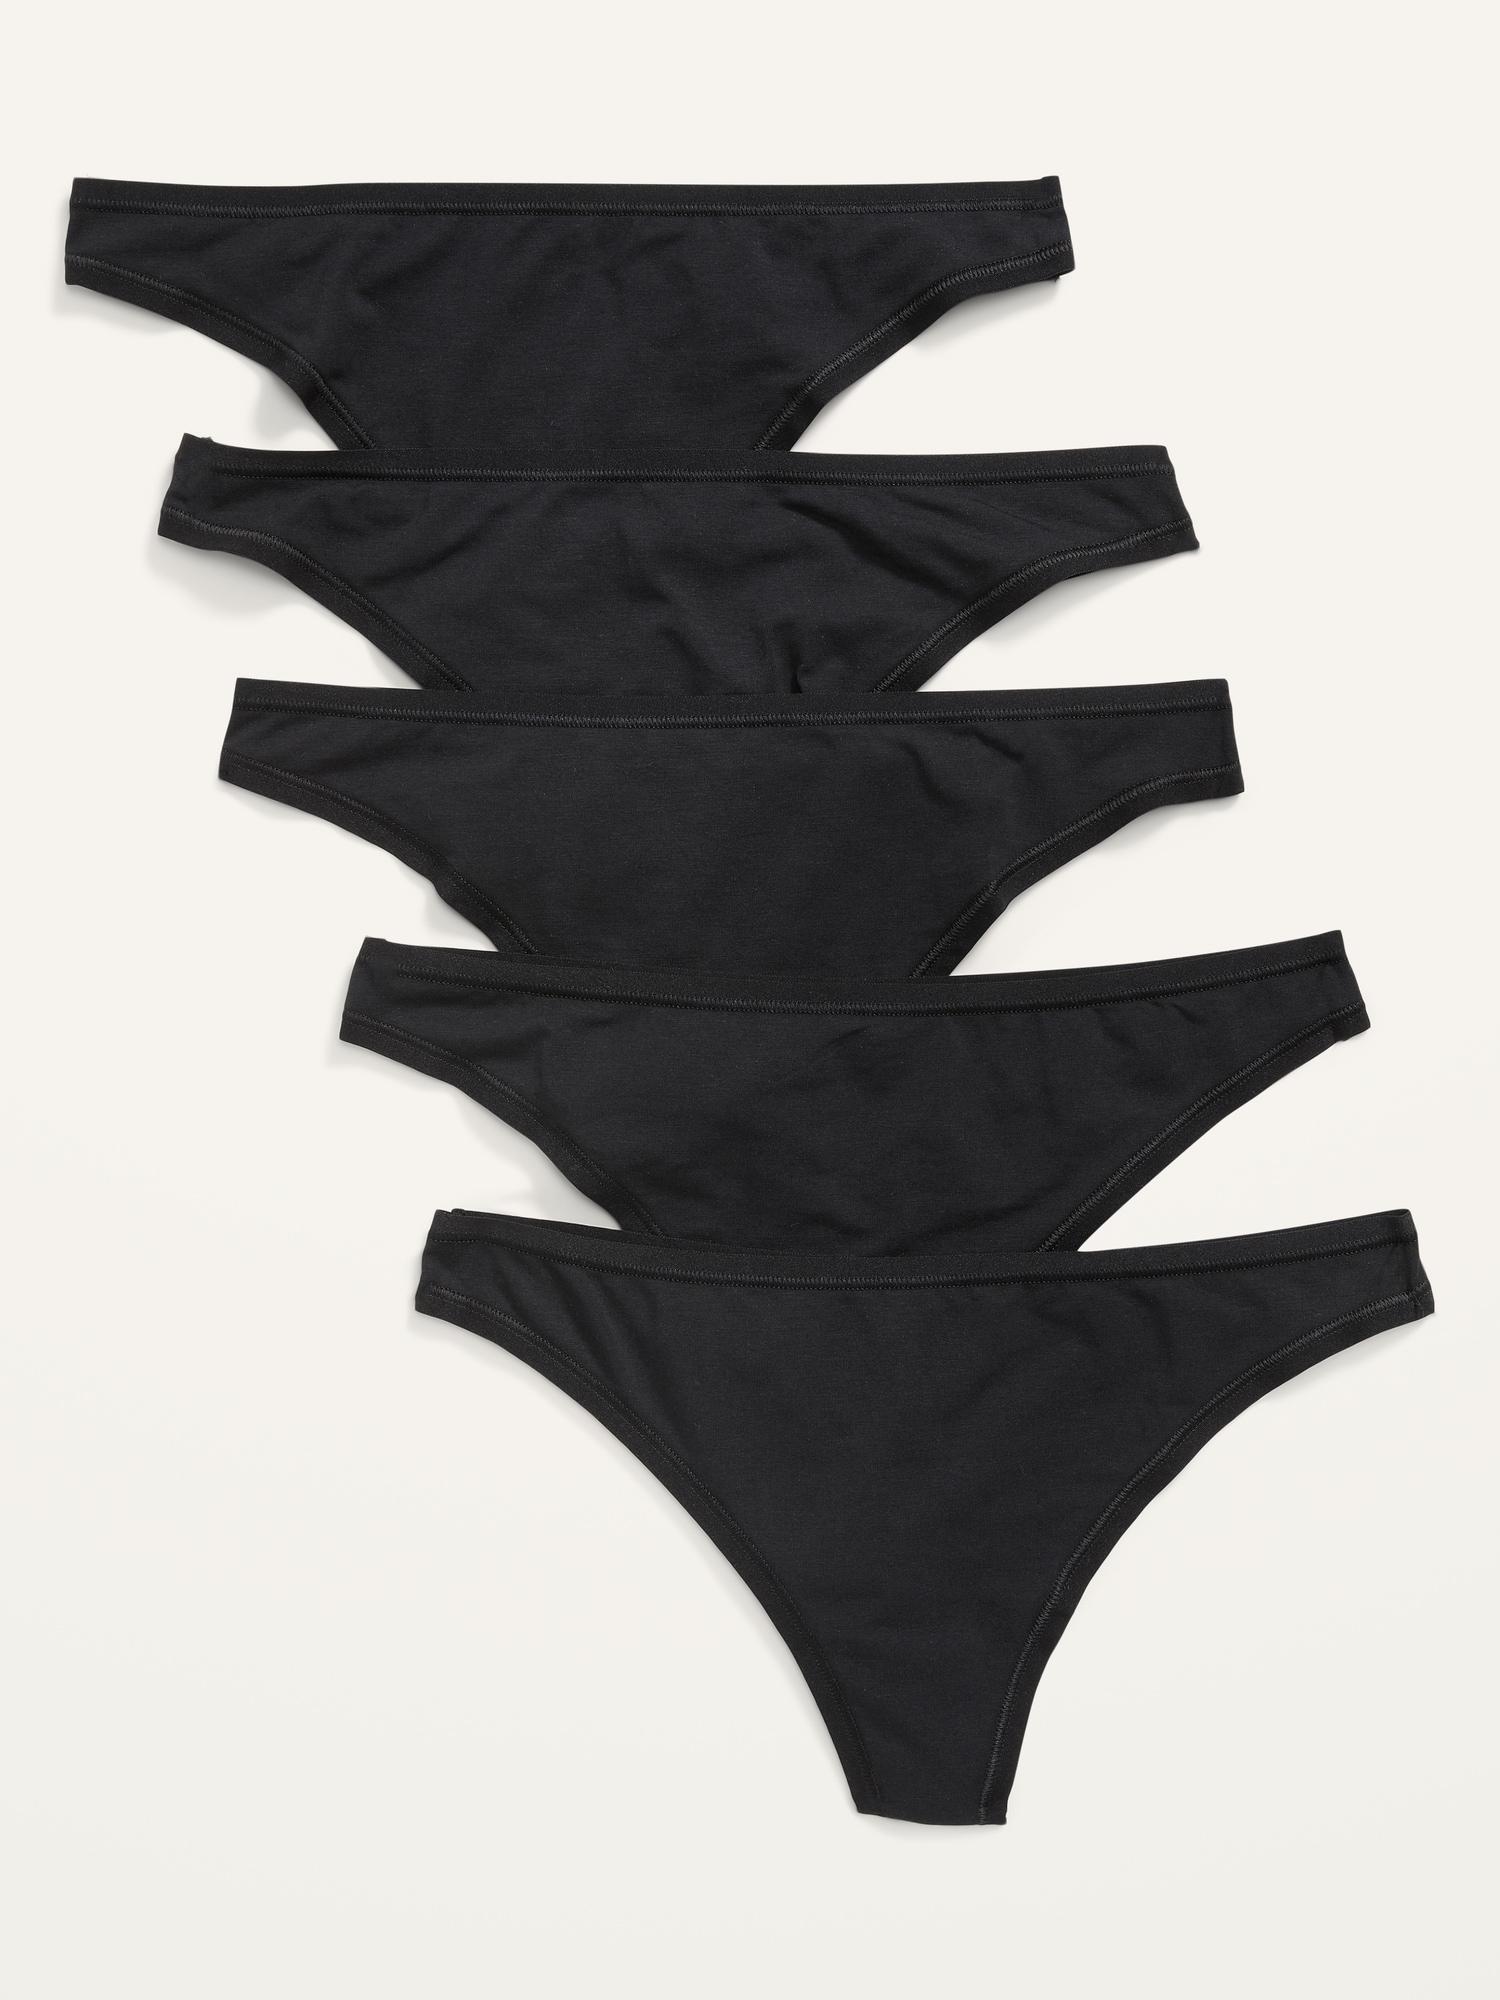 Women's Black Cotton Thong | Thongs for Women - Black Thong Underwear